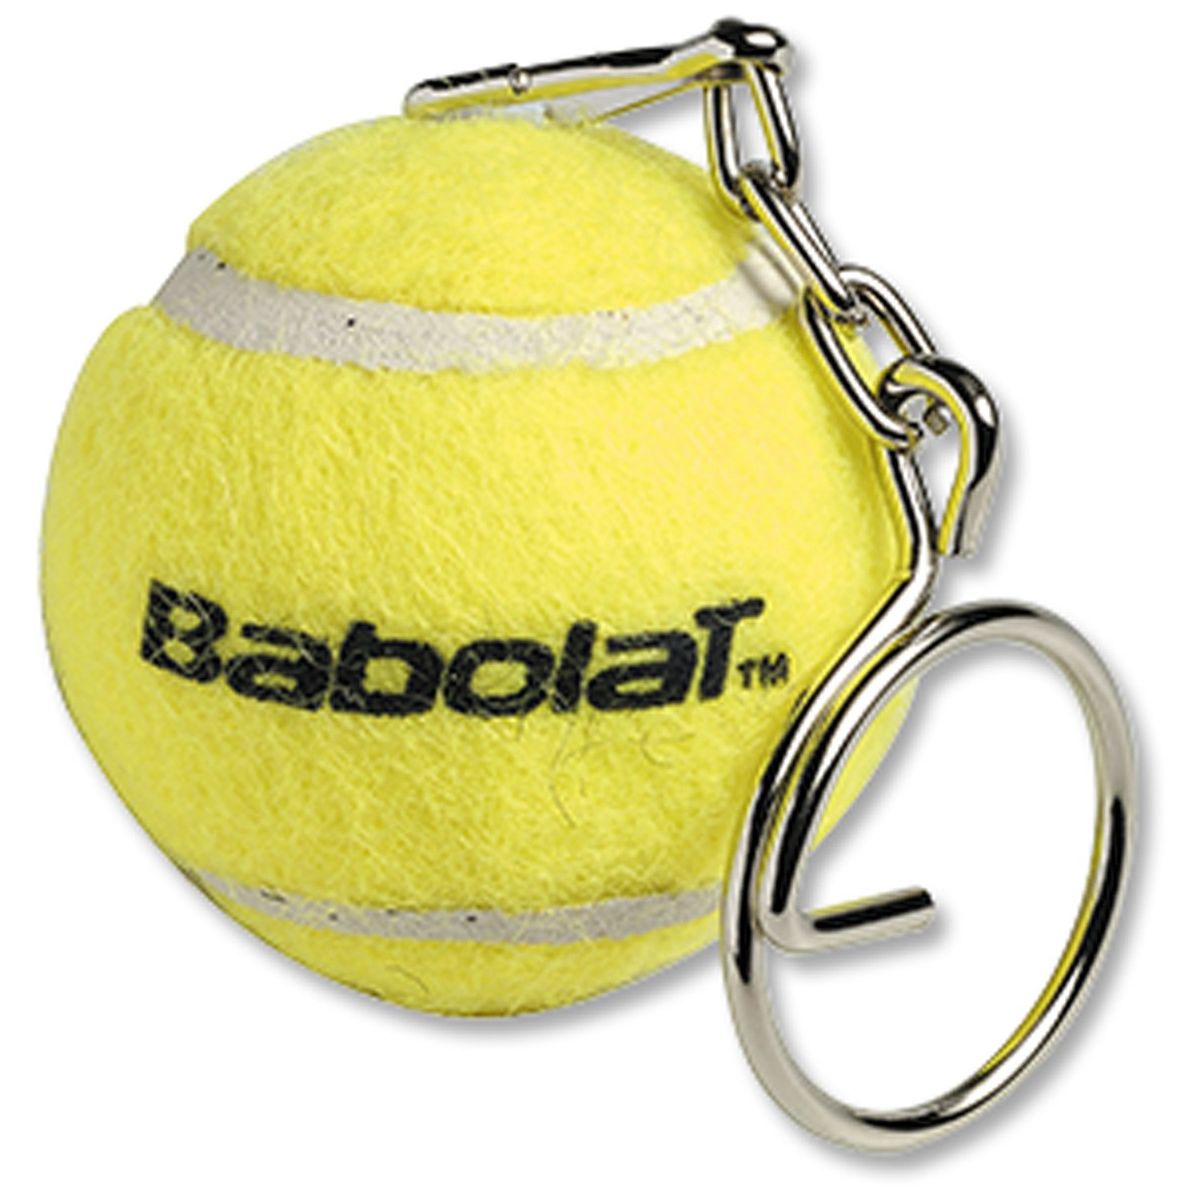 Babolat Tennis Ball Key Ring 860176